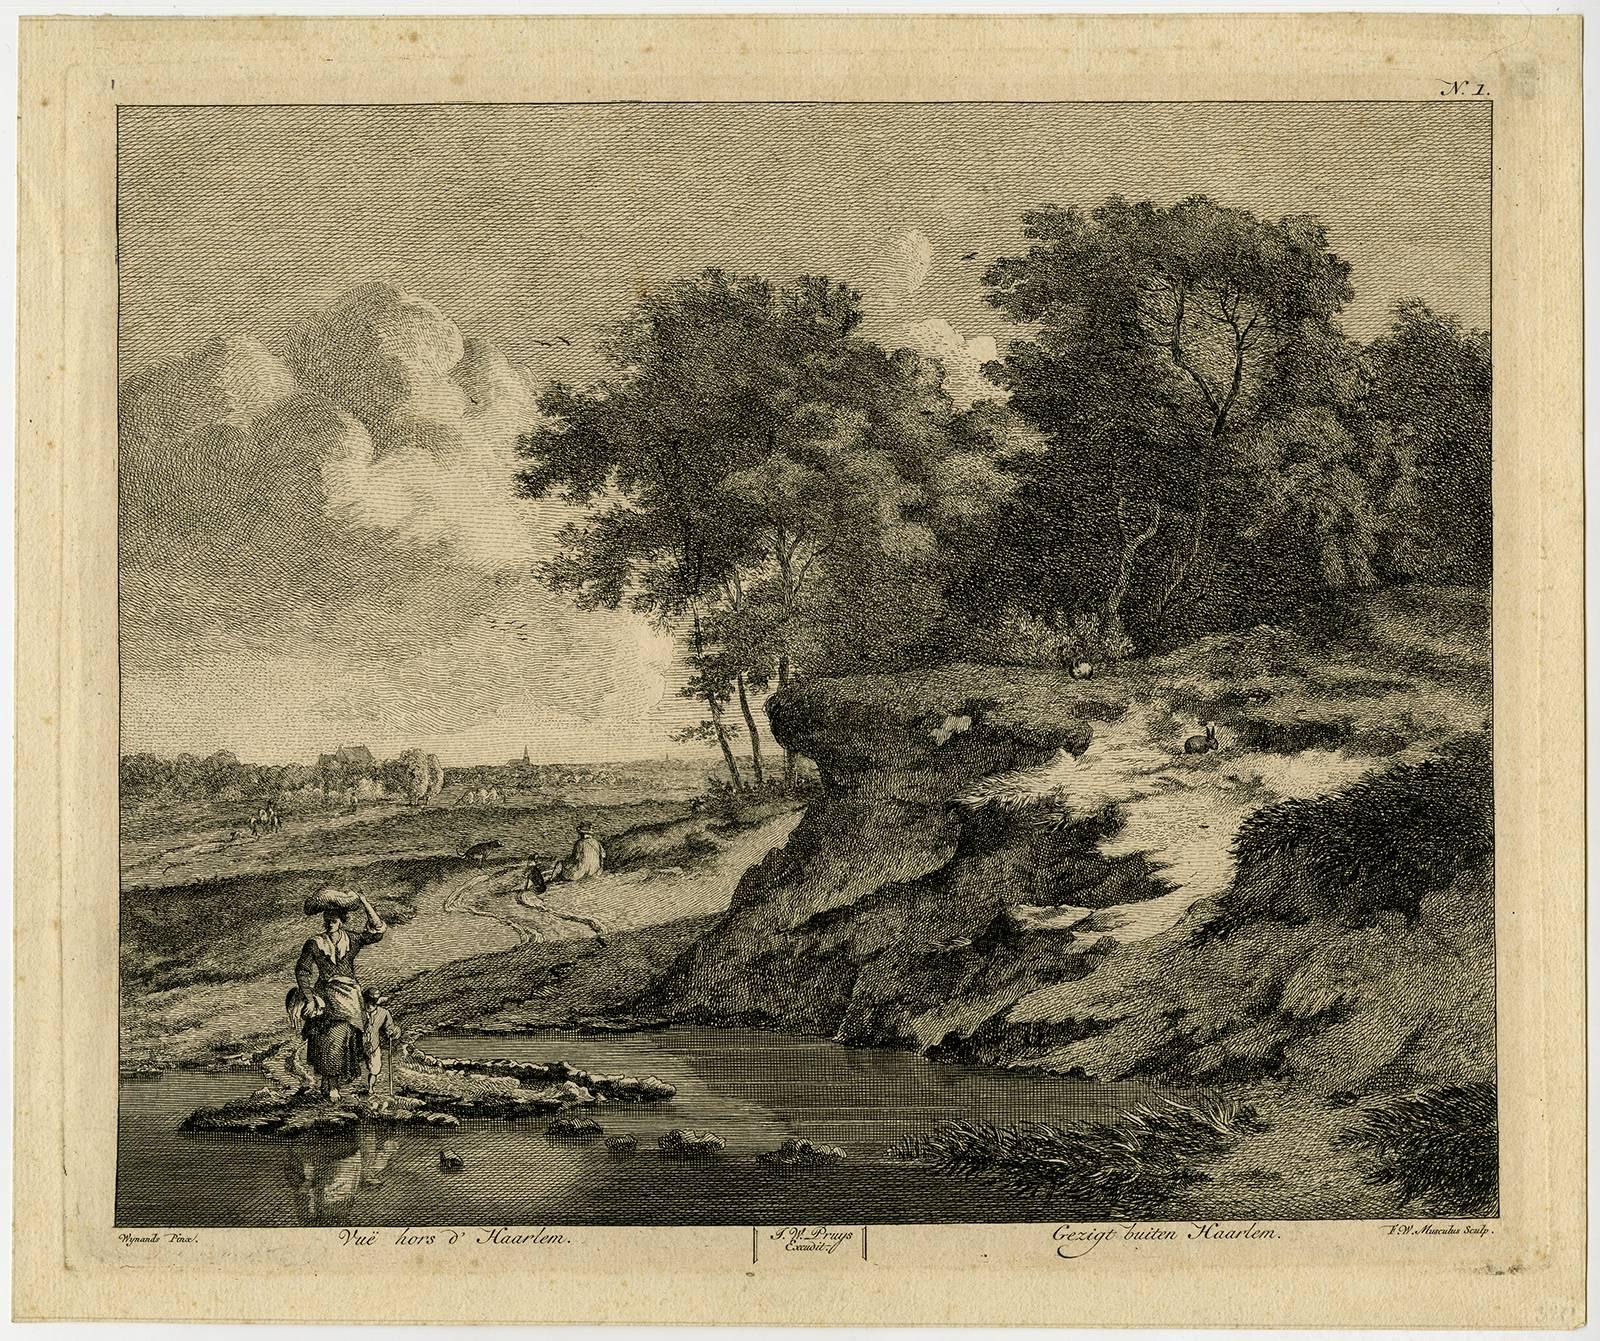 Plate 1.Vue hors d'Haarlem. Plate 2.Dito Vue hors d'Haarlem. - Print by F.W. Musculus